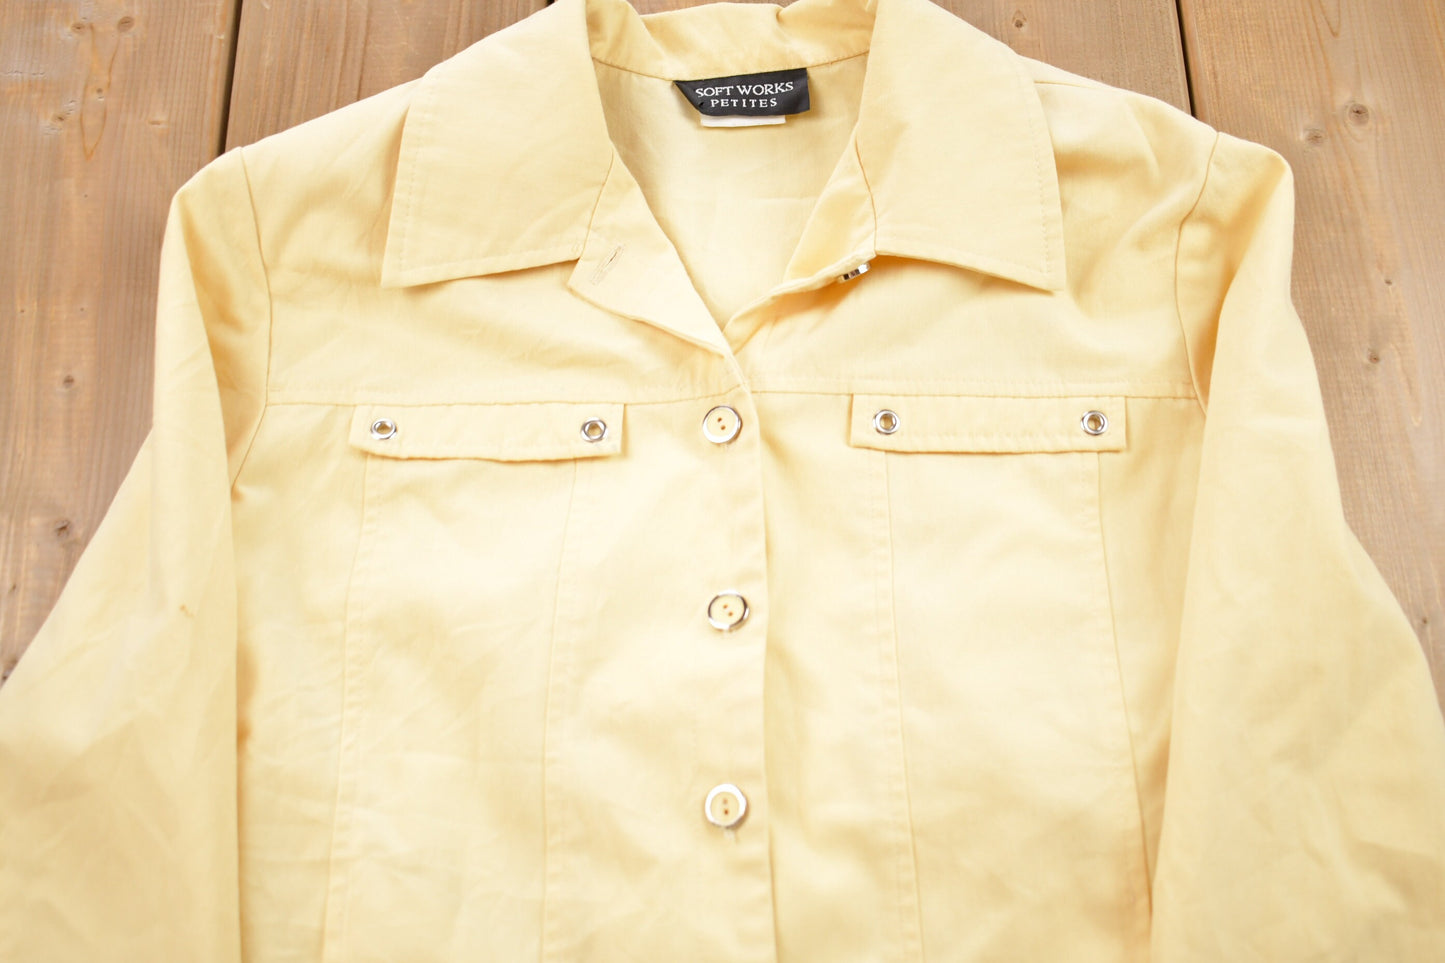 Vintage 1990s Soft Works Western Button Up Shirt / 1990s Button Up / Vintage Shirt / Western Shirt / Casual Shirt / Formal Shirt